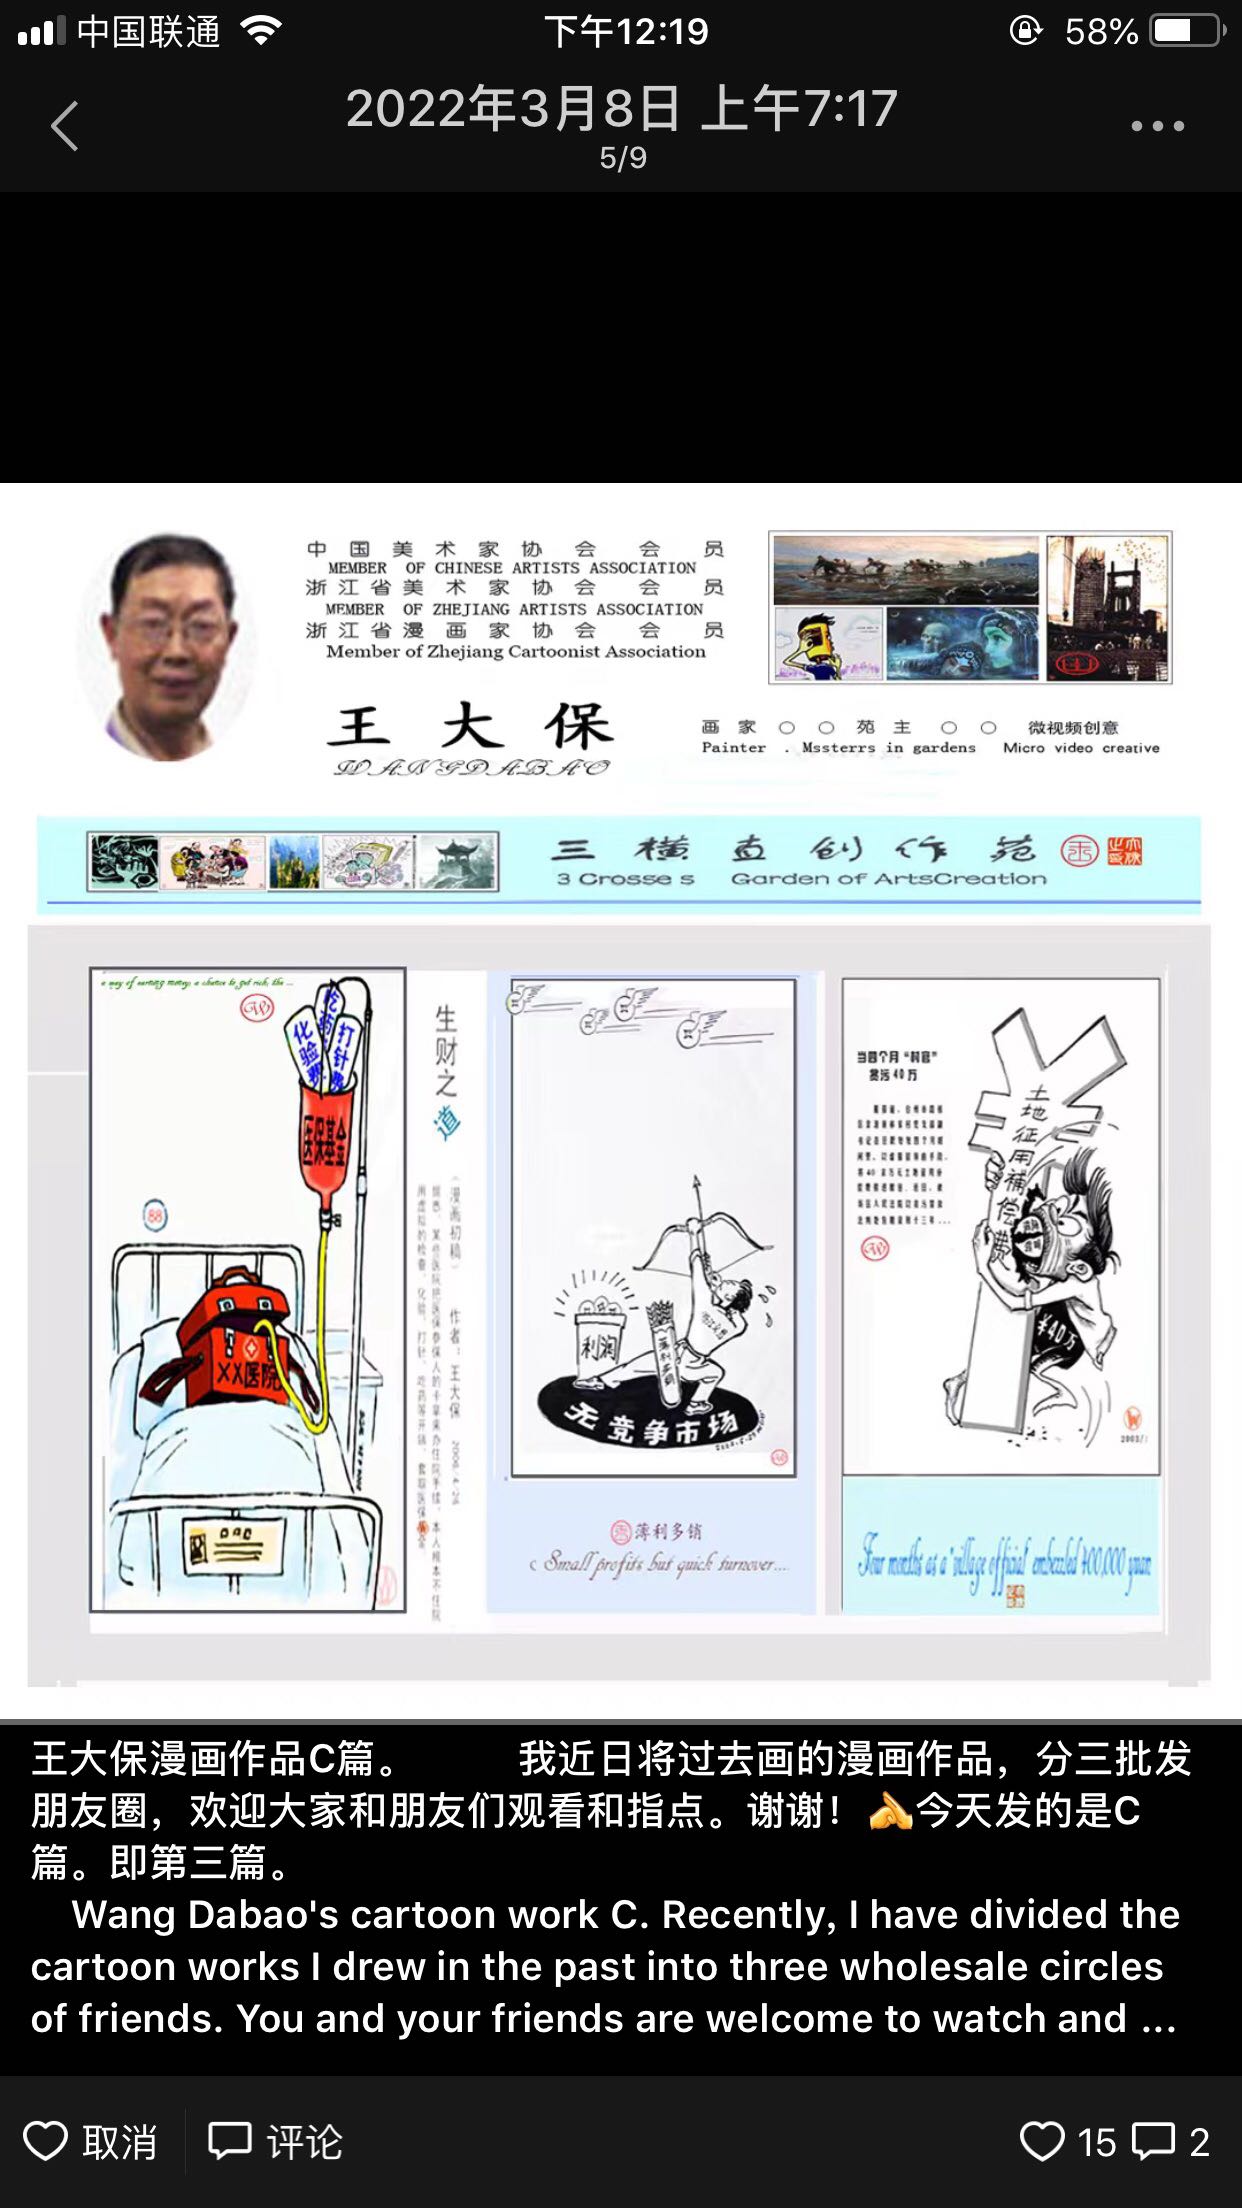 Wang_Dabao_cartoon_labe.jpg